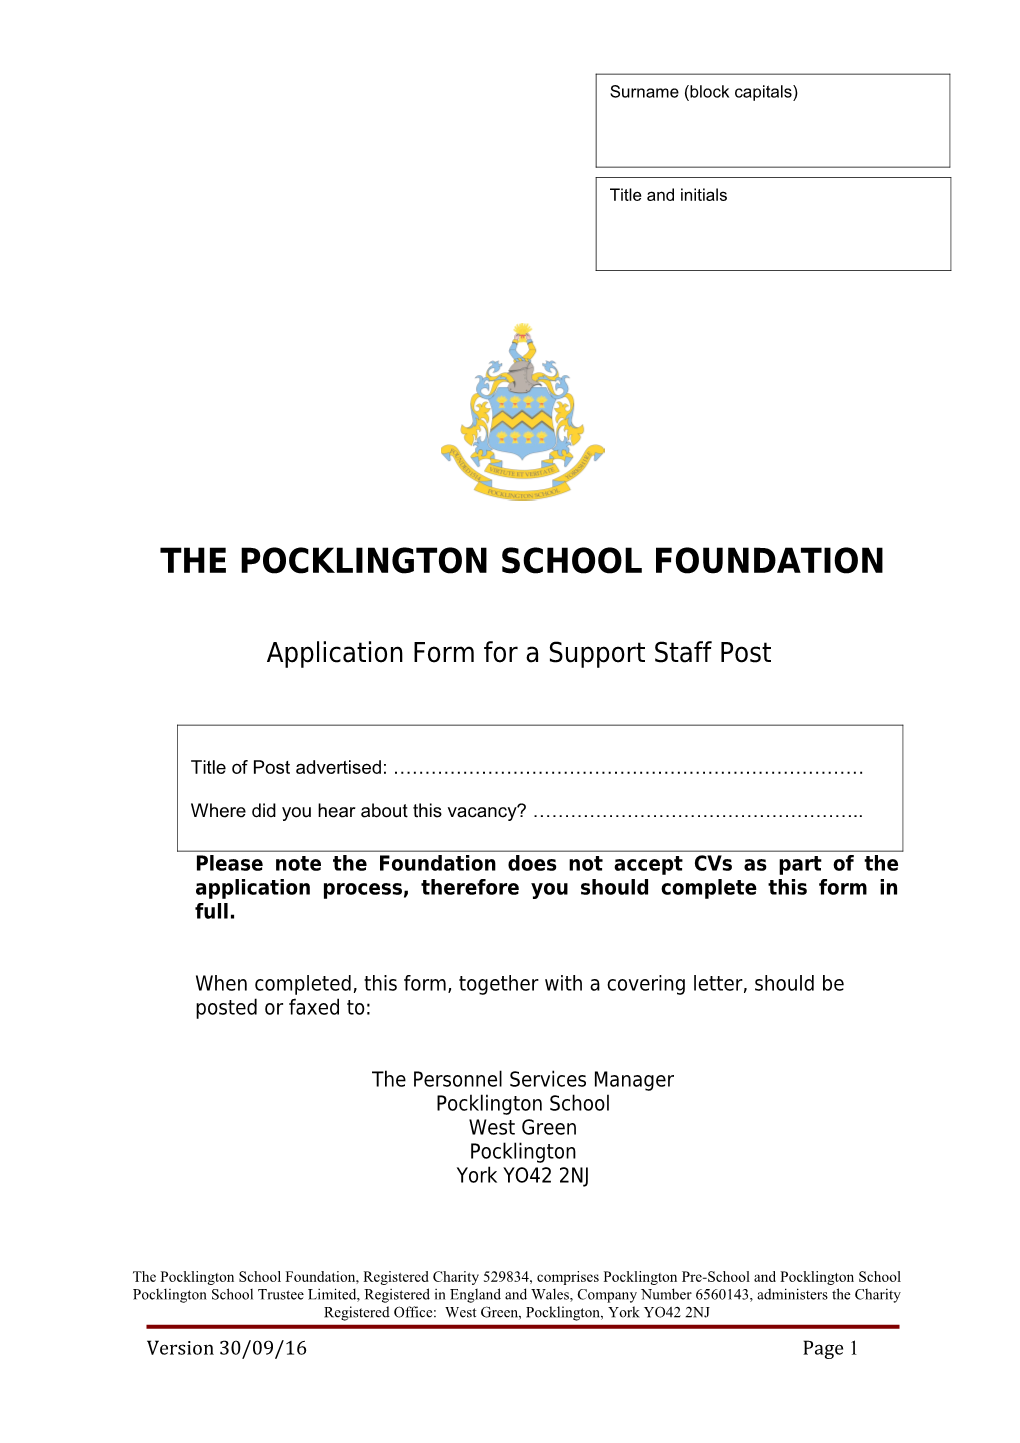 The Pocklington School Foundation